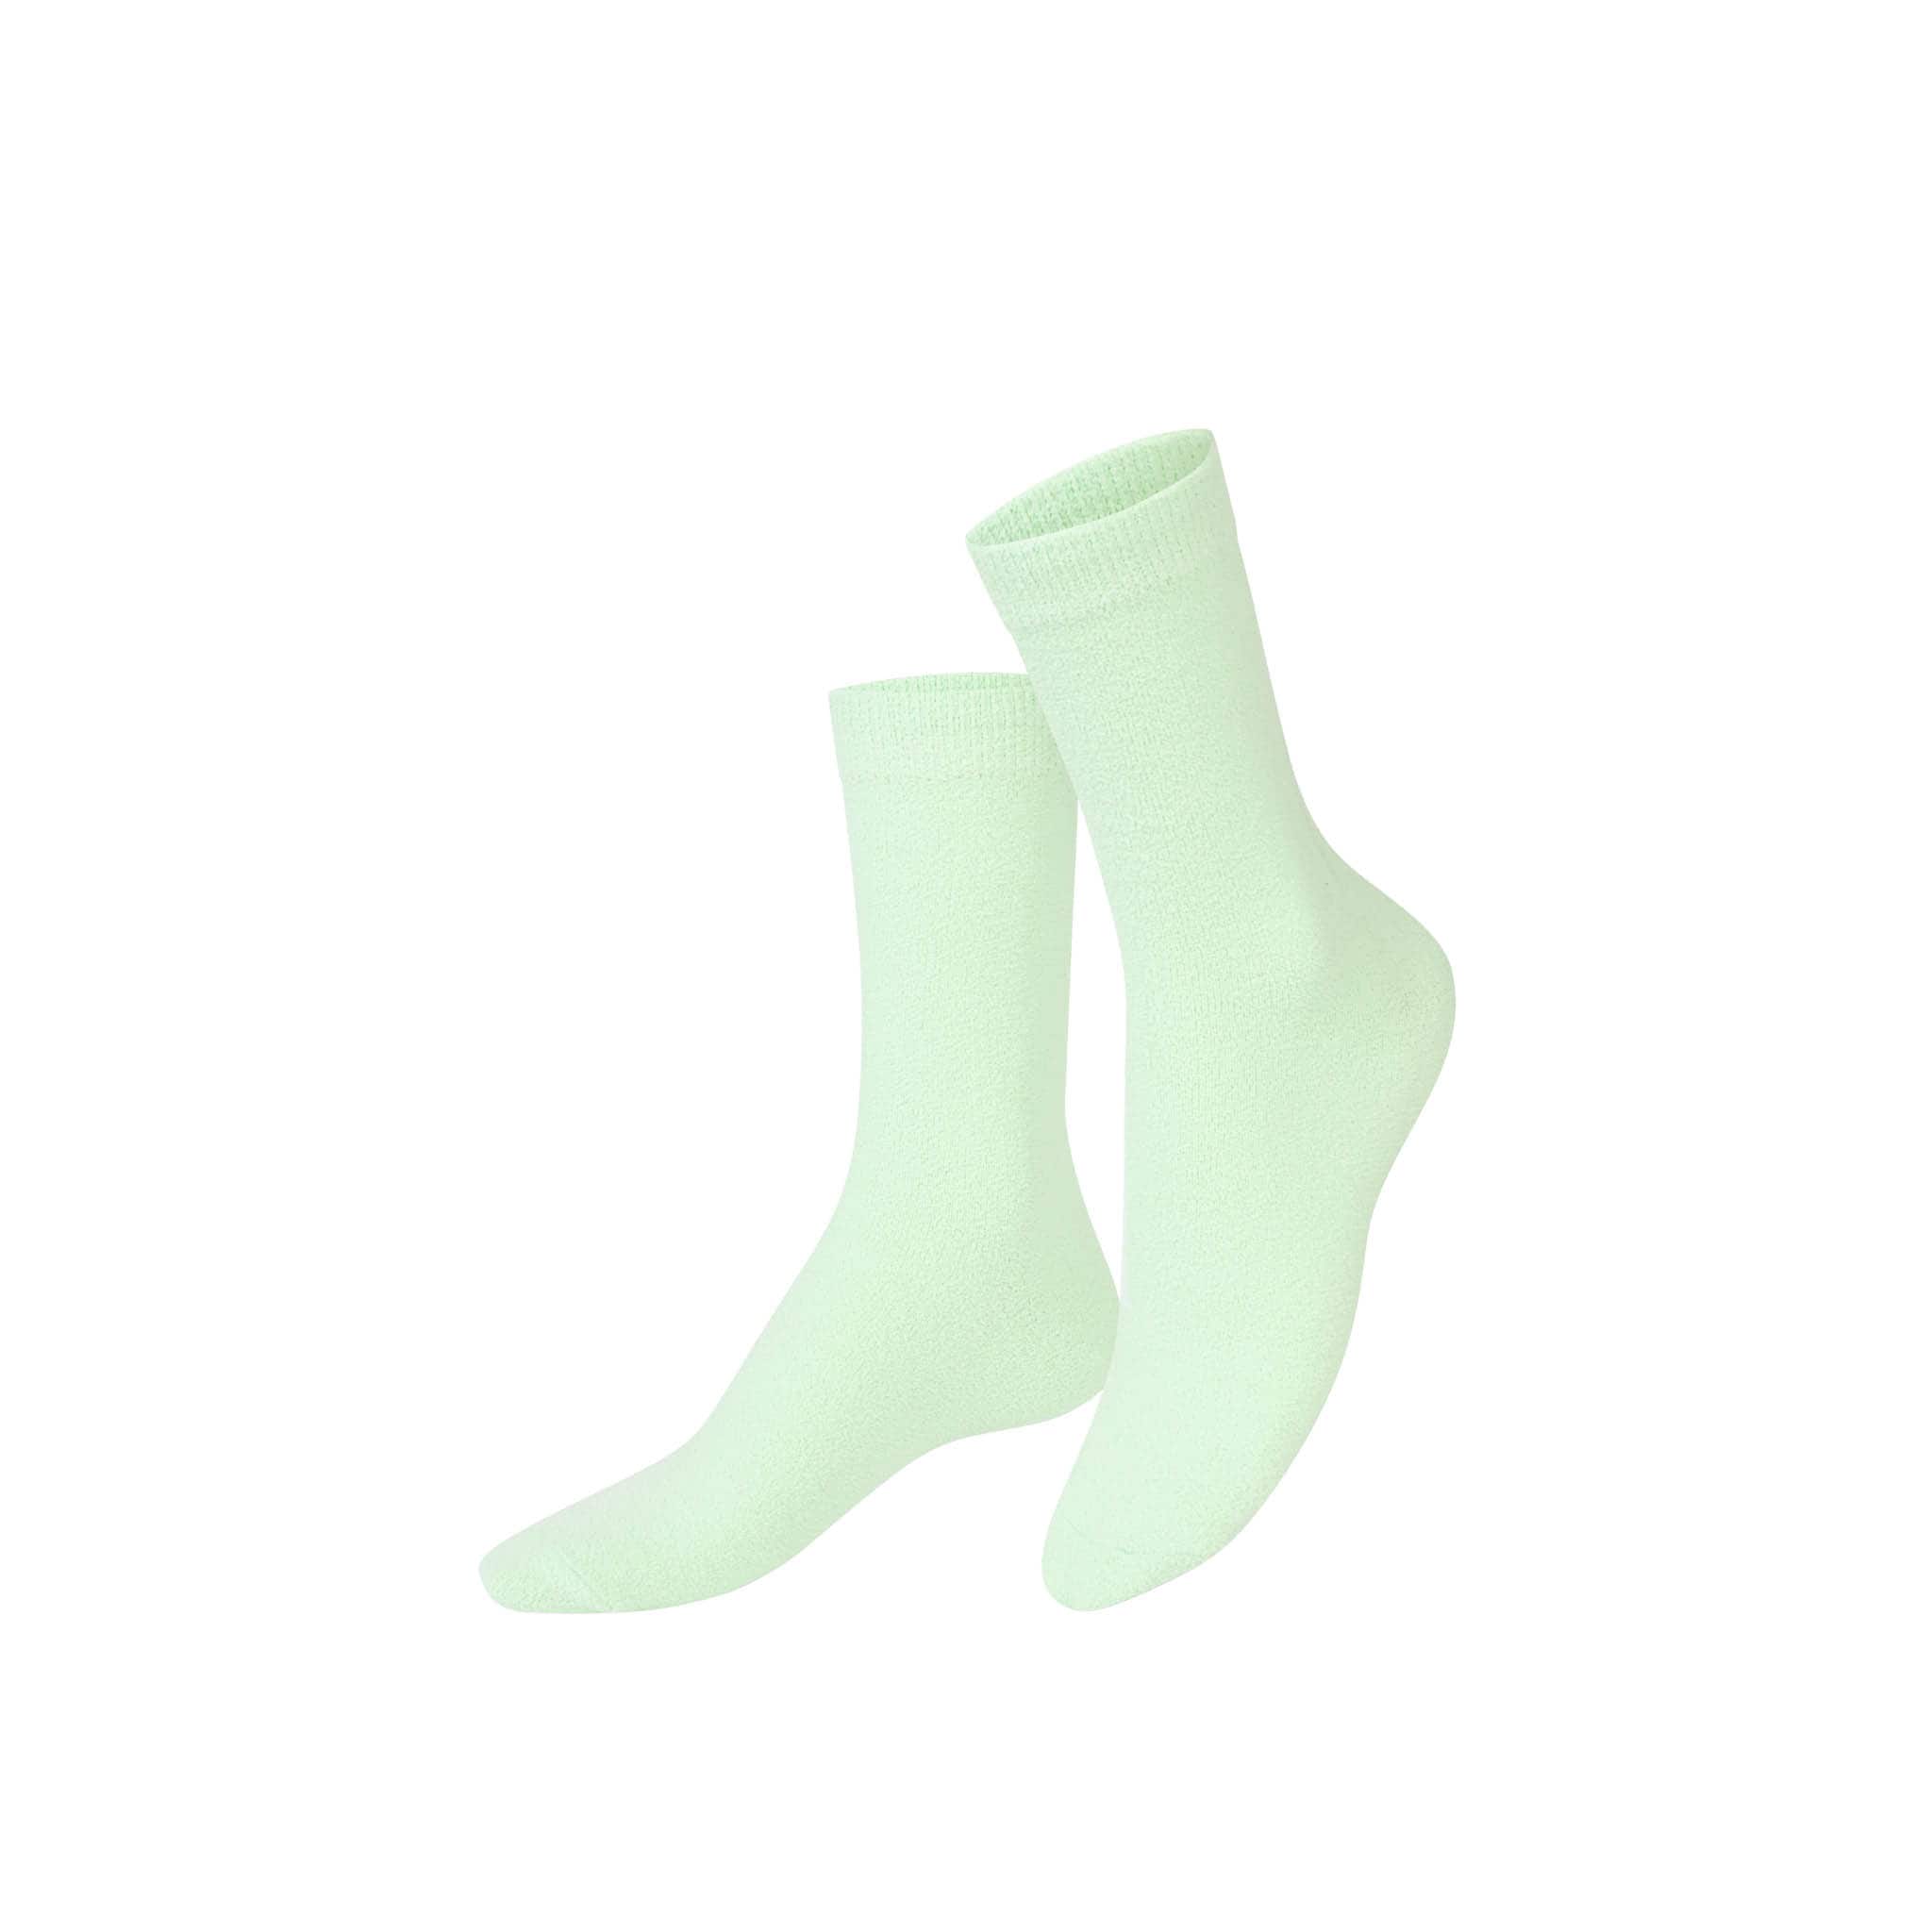 Matcha Mochi Socks, 2 Pairs